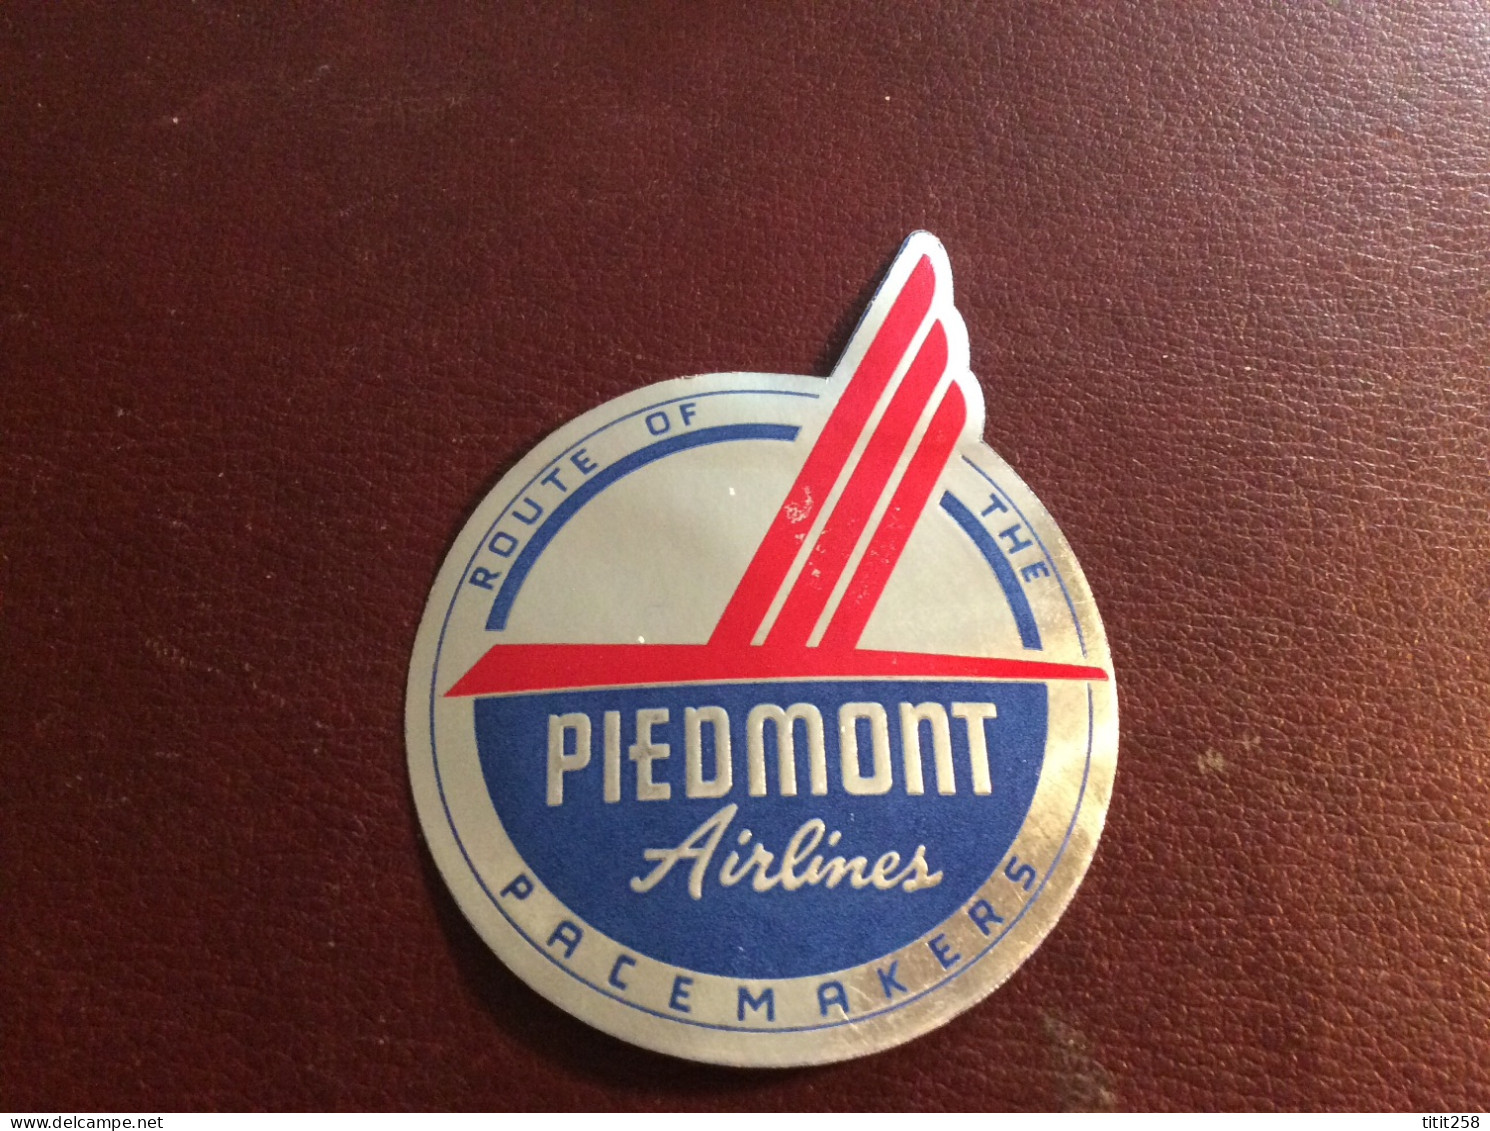 PIEDMONT AIRLINES ROUTE OF THE / PACEMAKERS  ( Avions Aéroports ) - Etichette Da Viaggio E Targhette